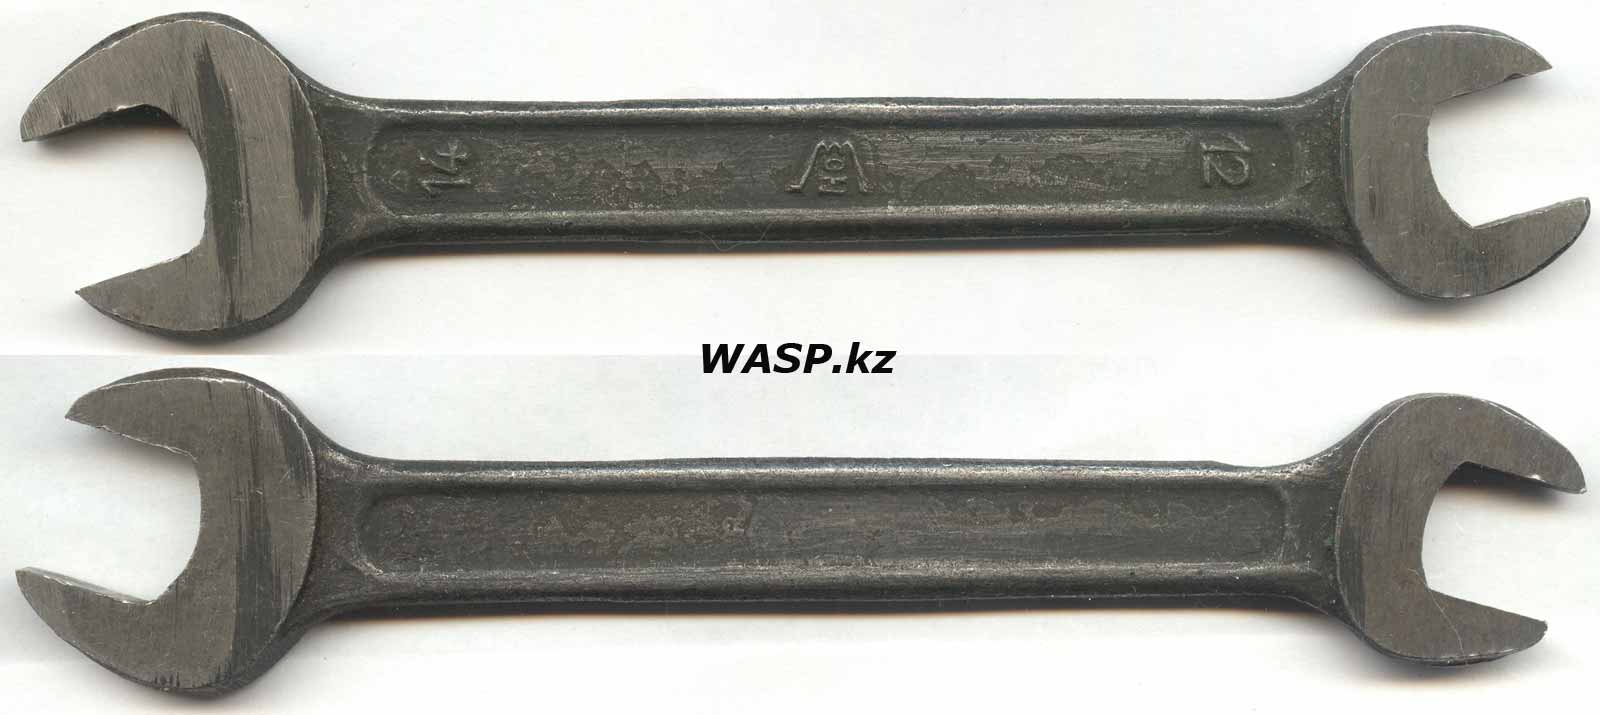 wasp.kz/images/articles/3-rdrt-ussr-pow-60098-sssds-65t54.jpg